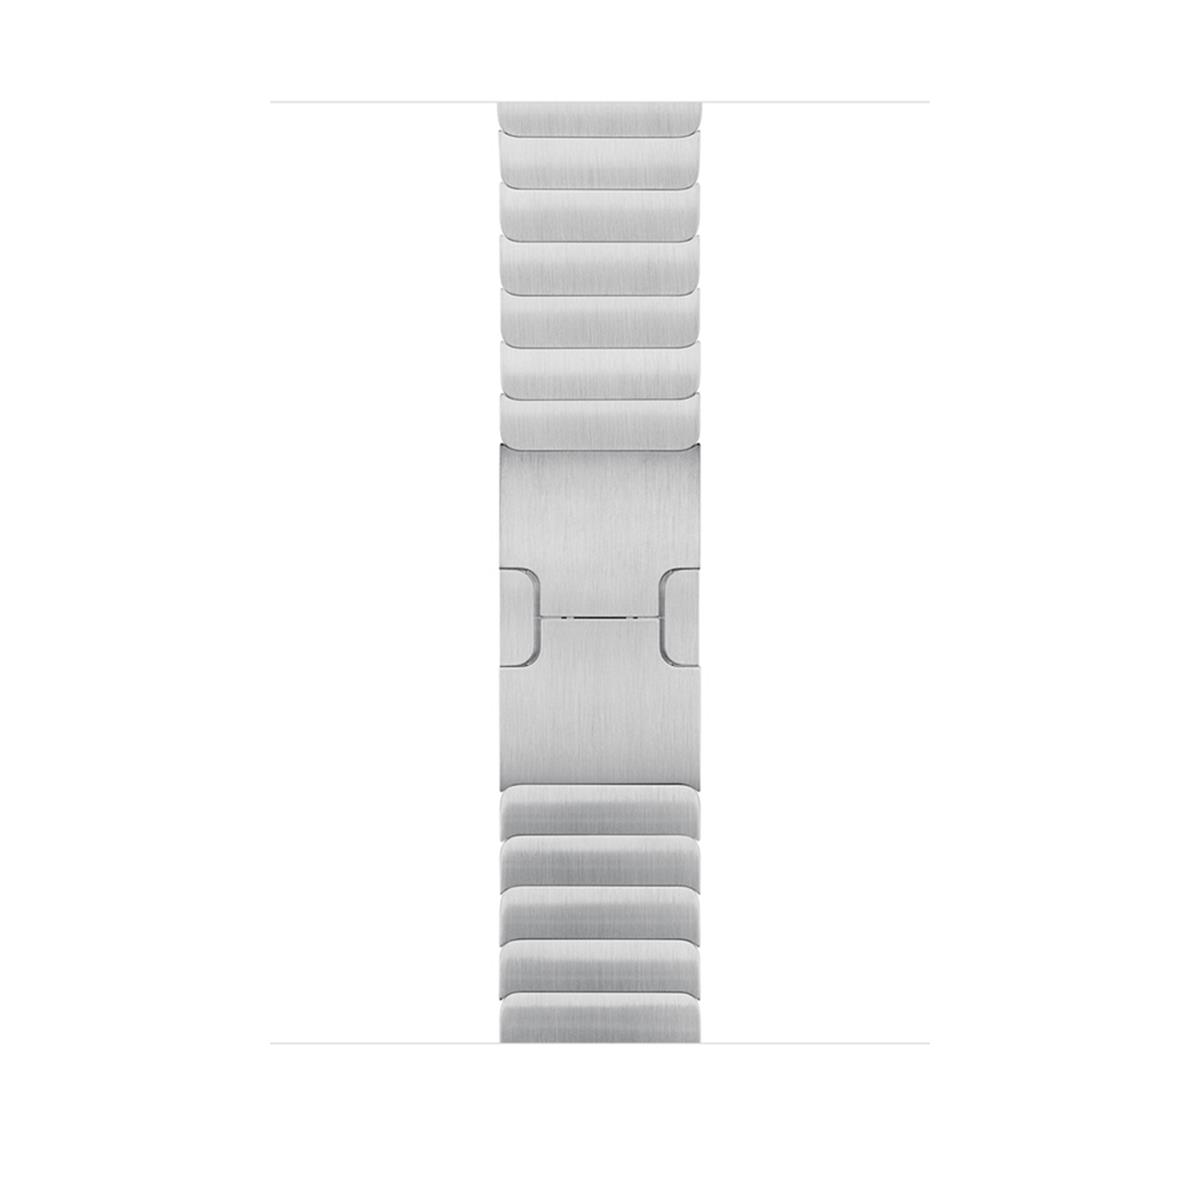 Image of Apple 42mm Stainless Steel Link Bracelet Silver